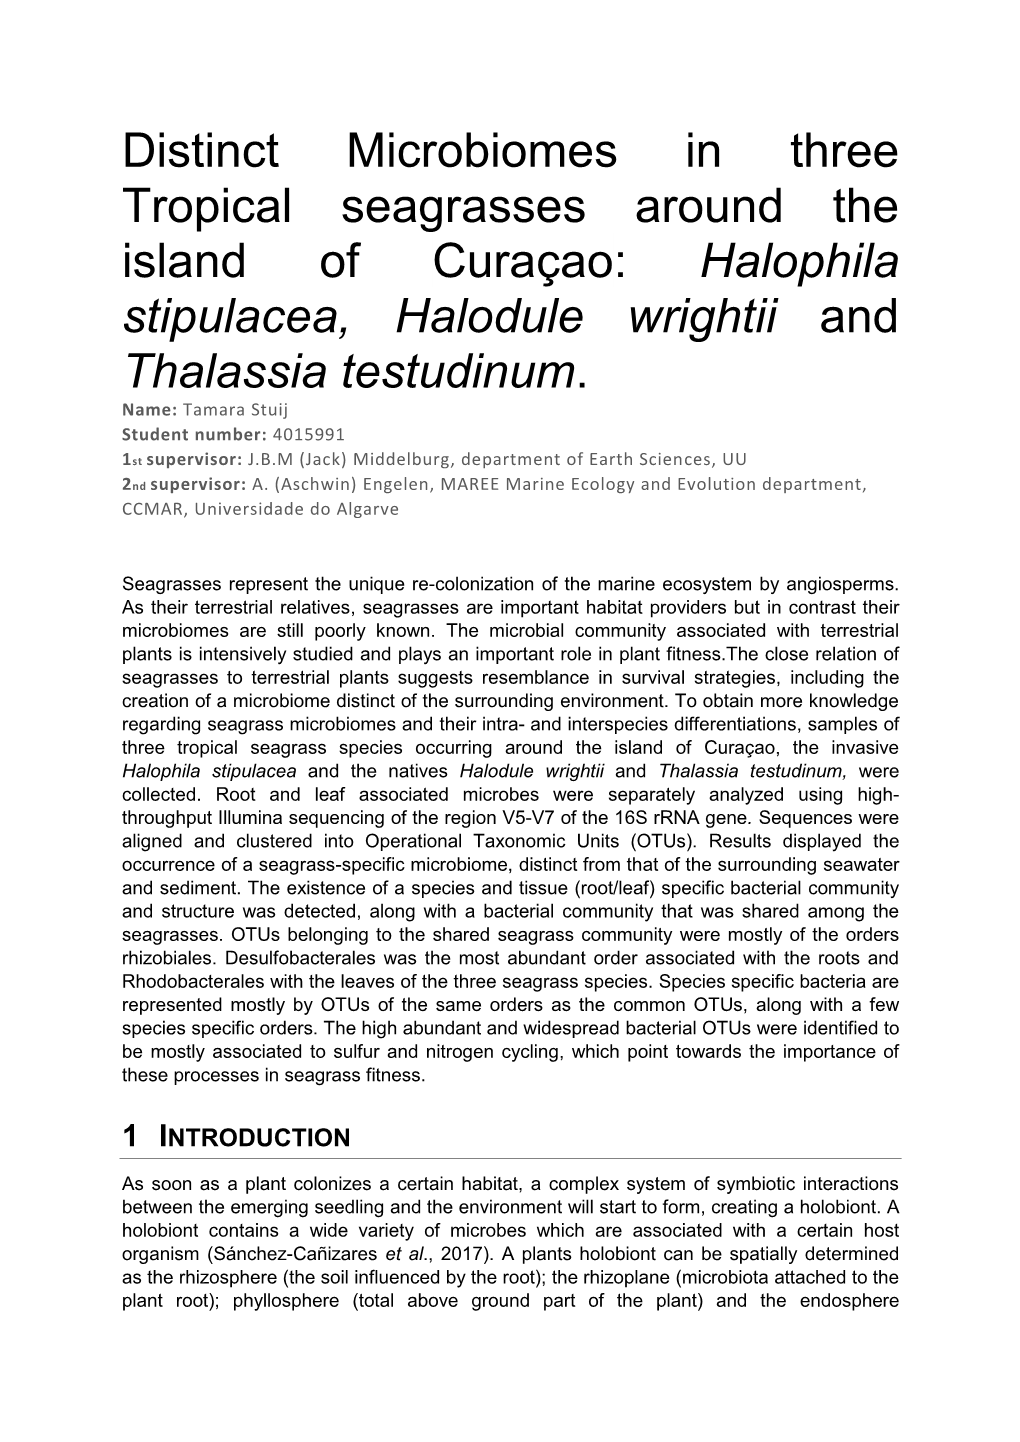 Distinct Microbiomes in Three Tropical Seagrasses Around the Island of Curaçao: Halophila Stipulacea, Halodule Wrightii and Thalassia Testudinum